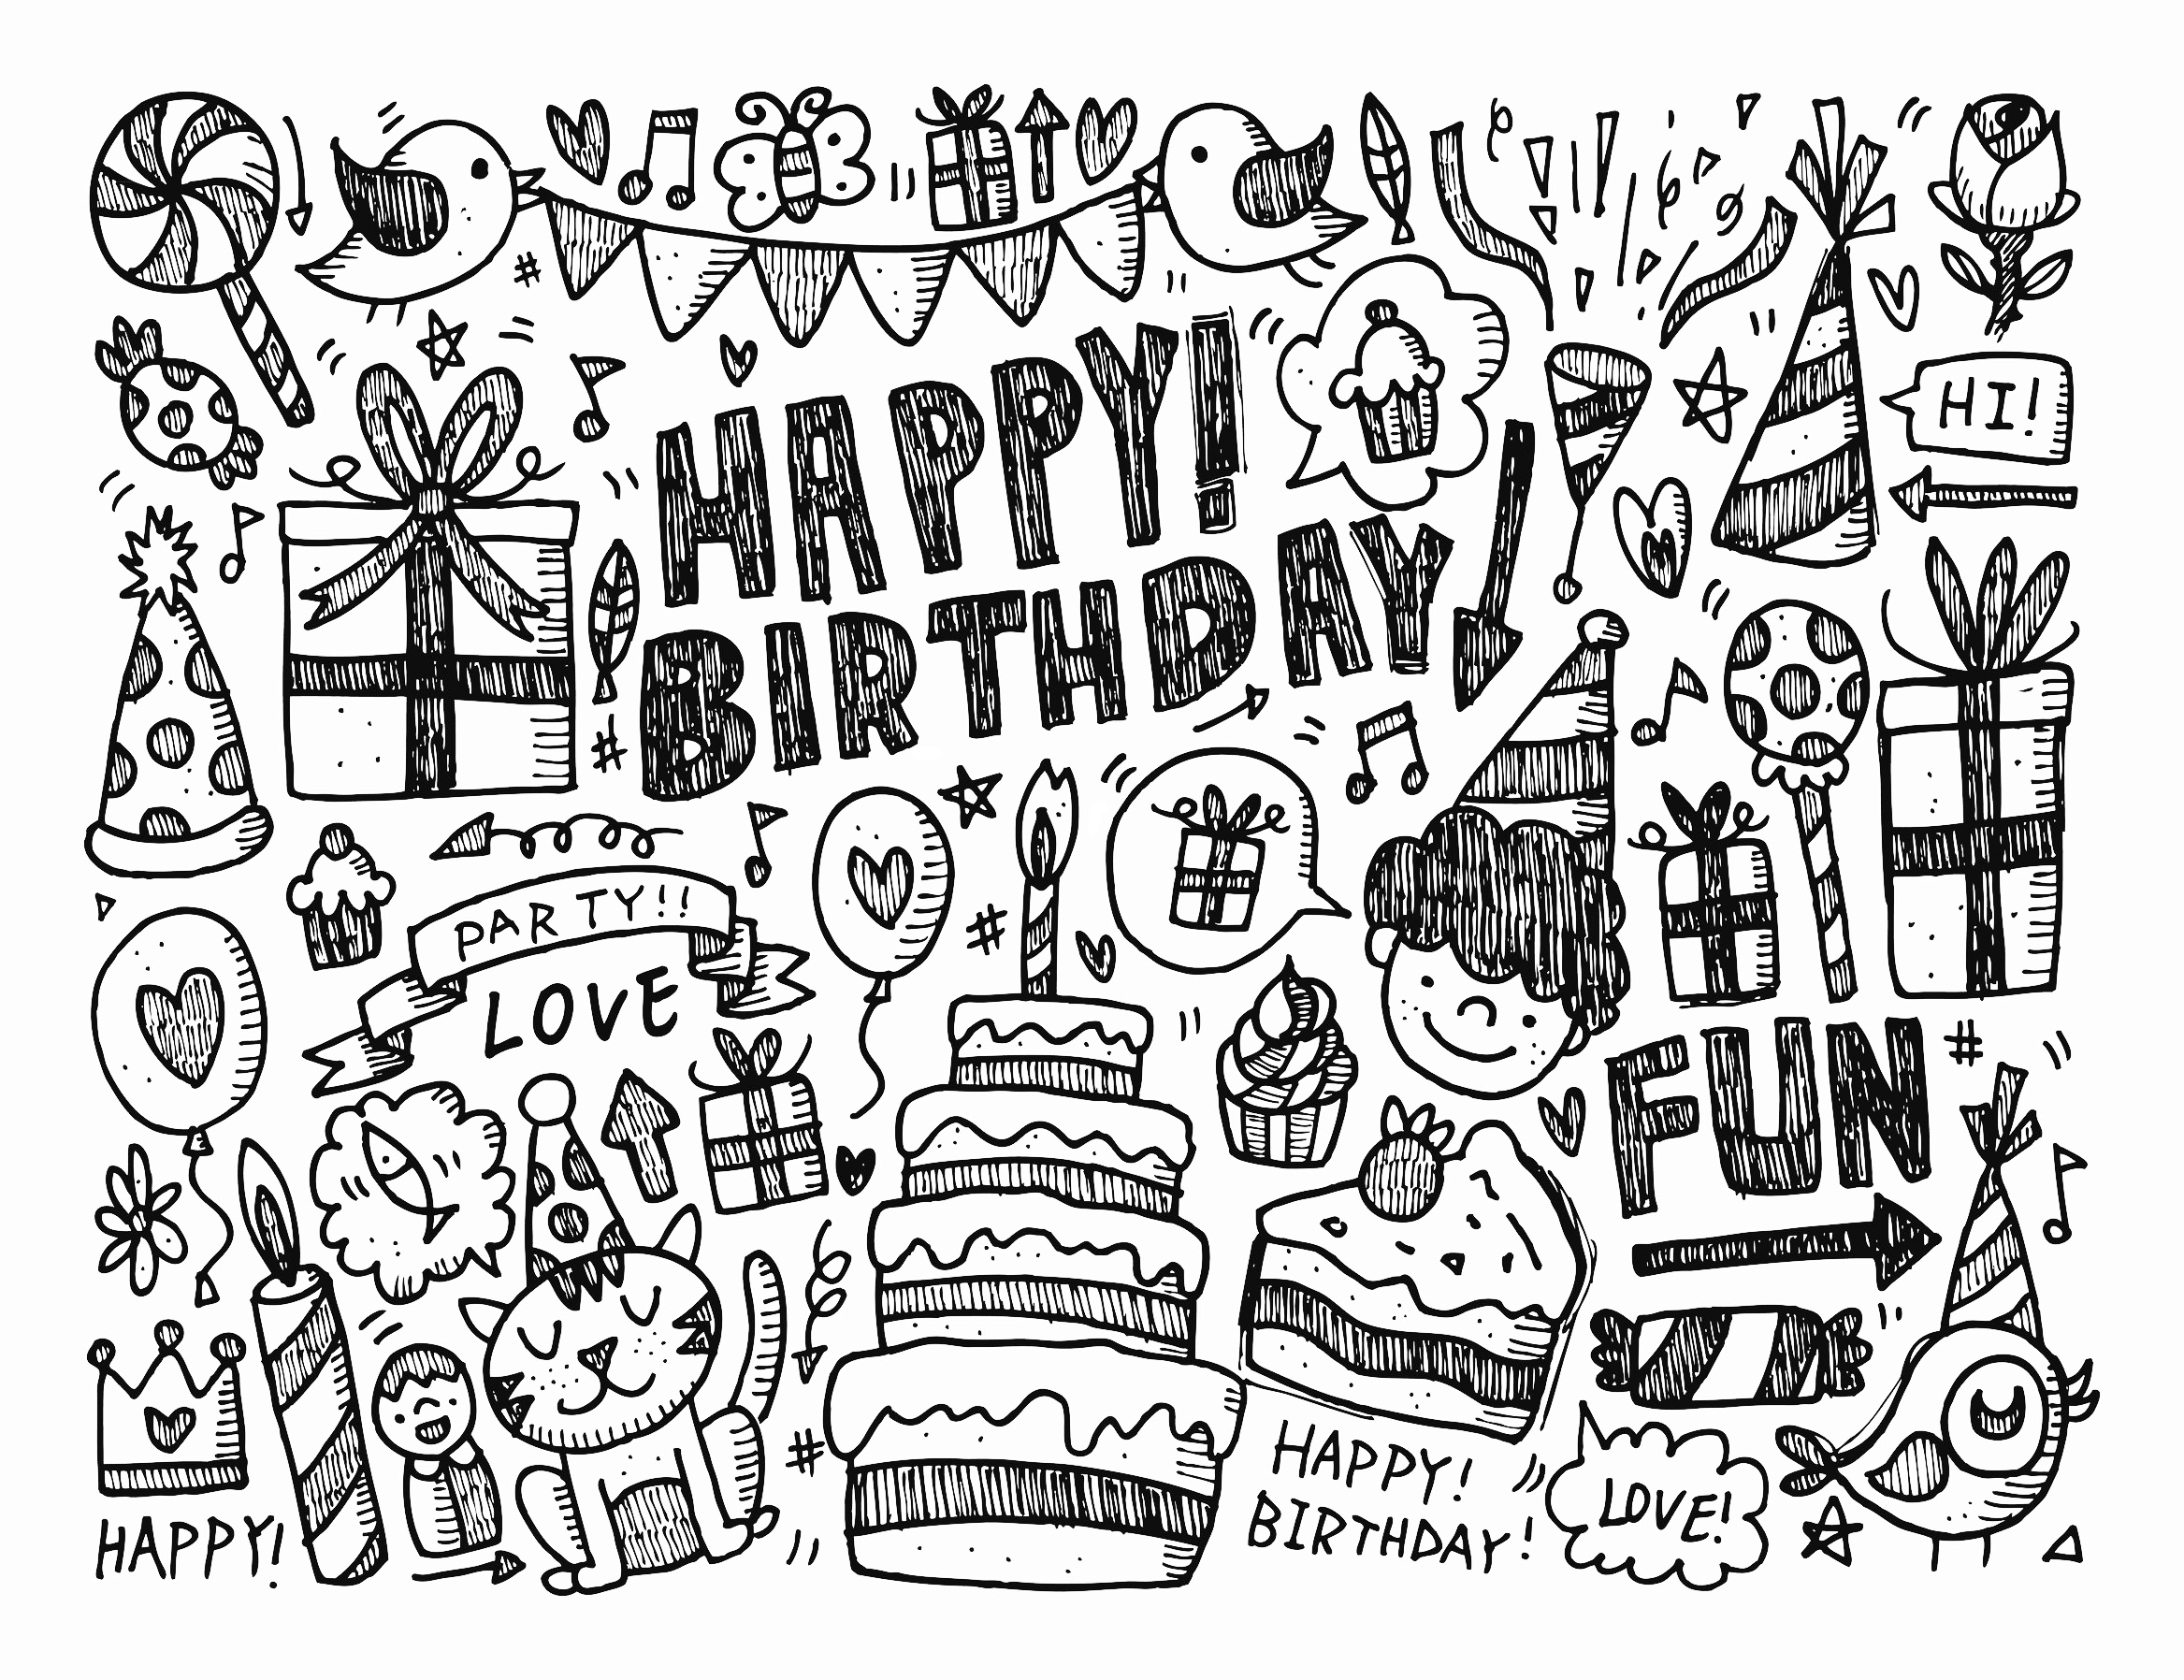 Doodle to color 'Happy birthday', Artist : Notkoo2008   Source : 123rf